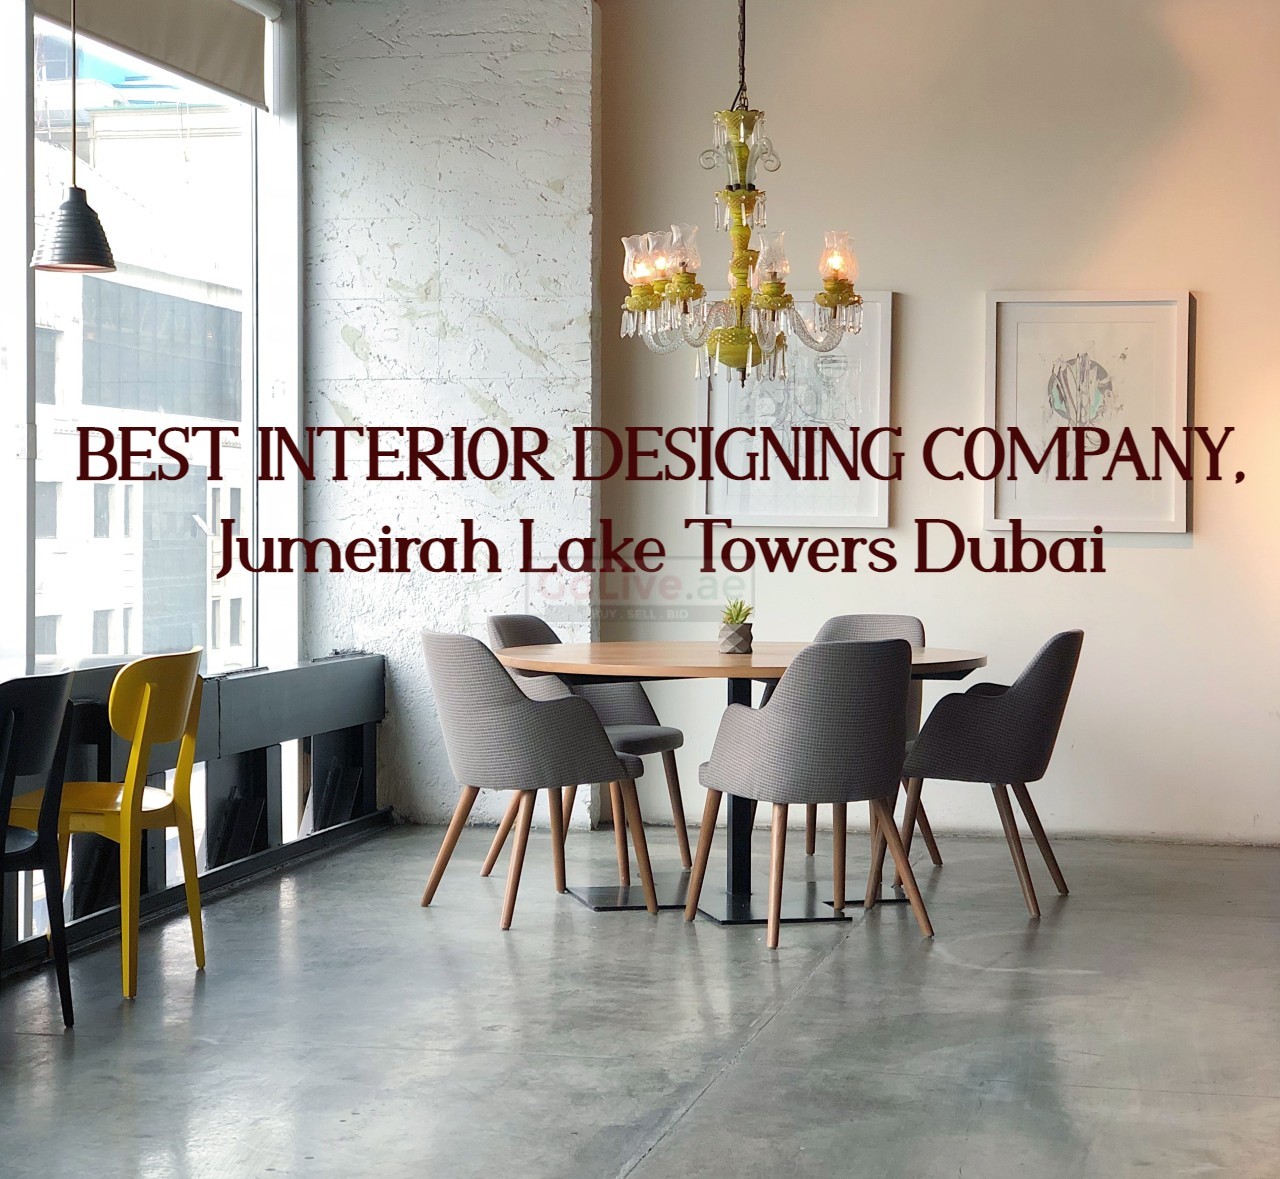 INTERIOR DESIGNING COMPANY, JLT Dubai